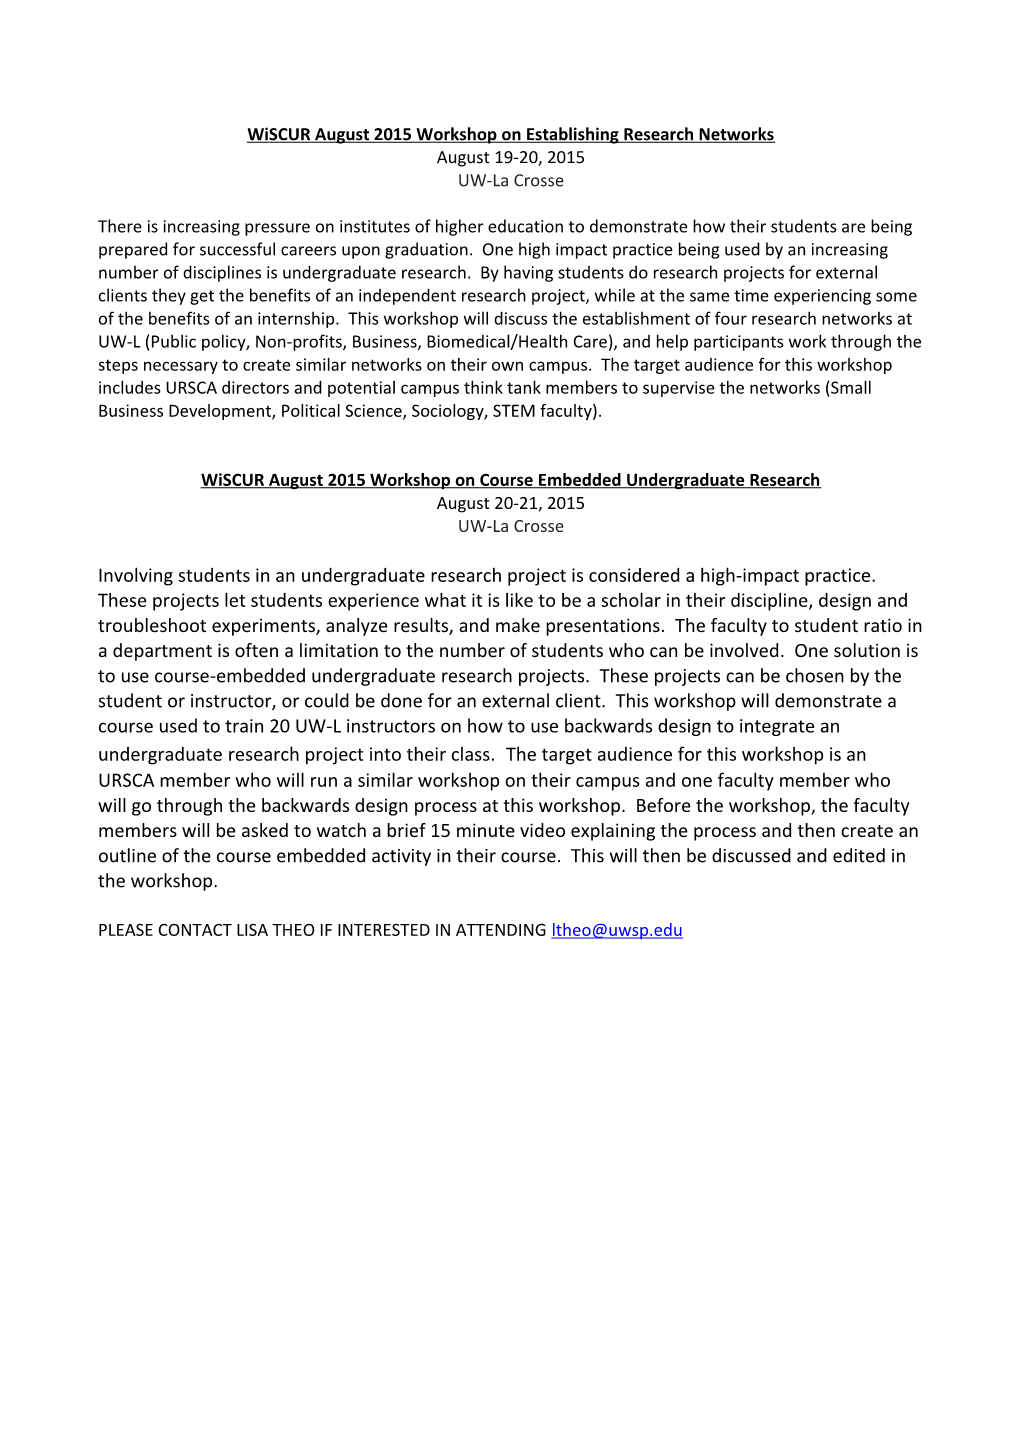 Institutionalizing Undergraduate Research, Scholarship, and Creative Activity (URSCA) In